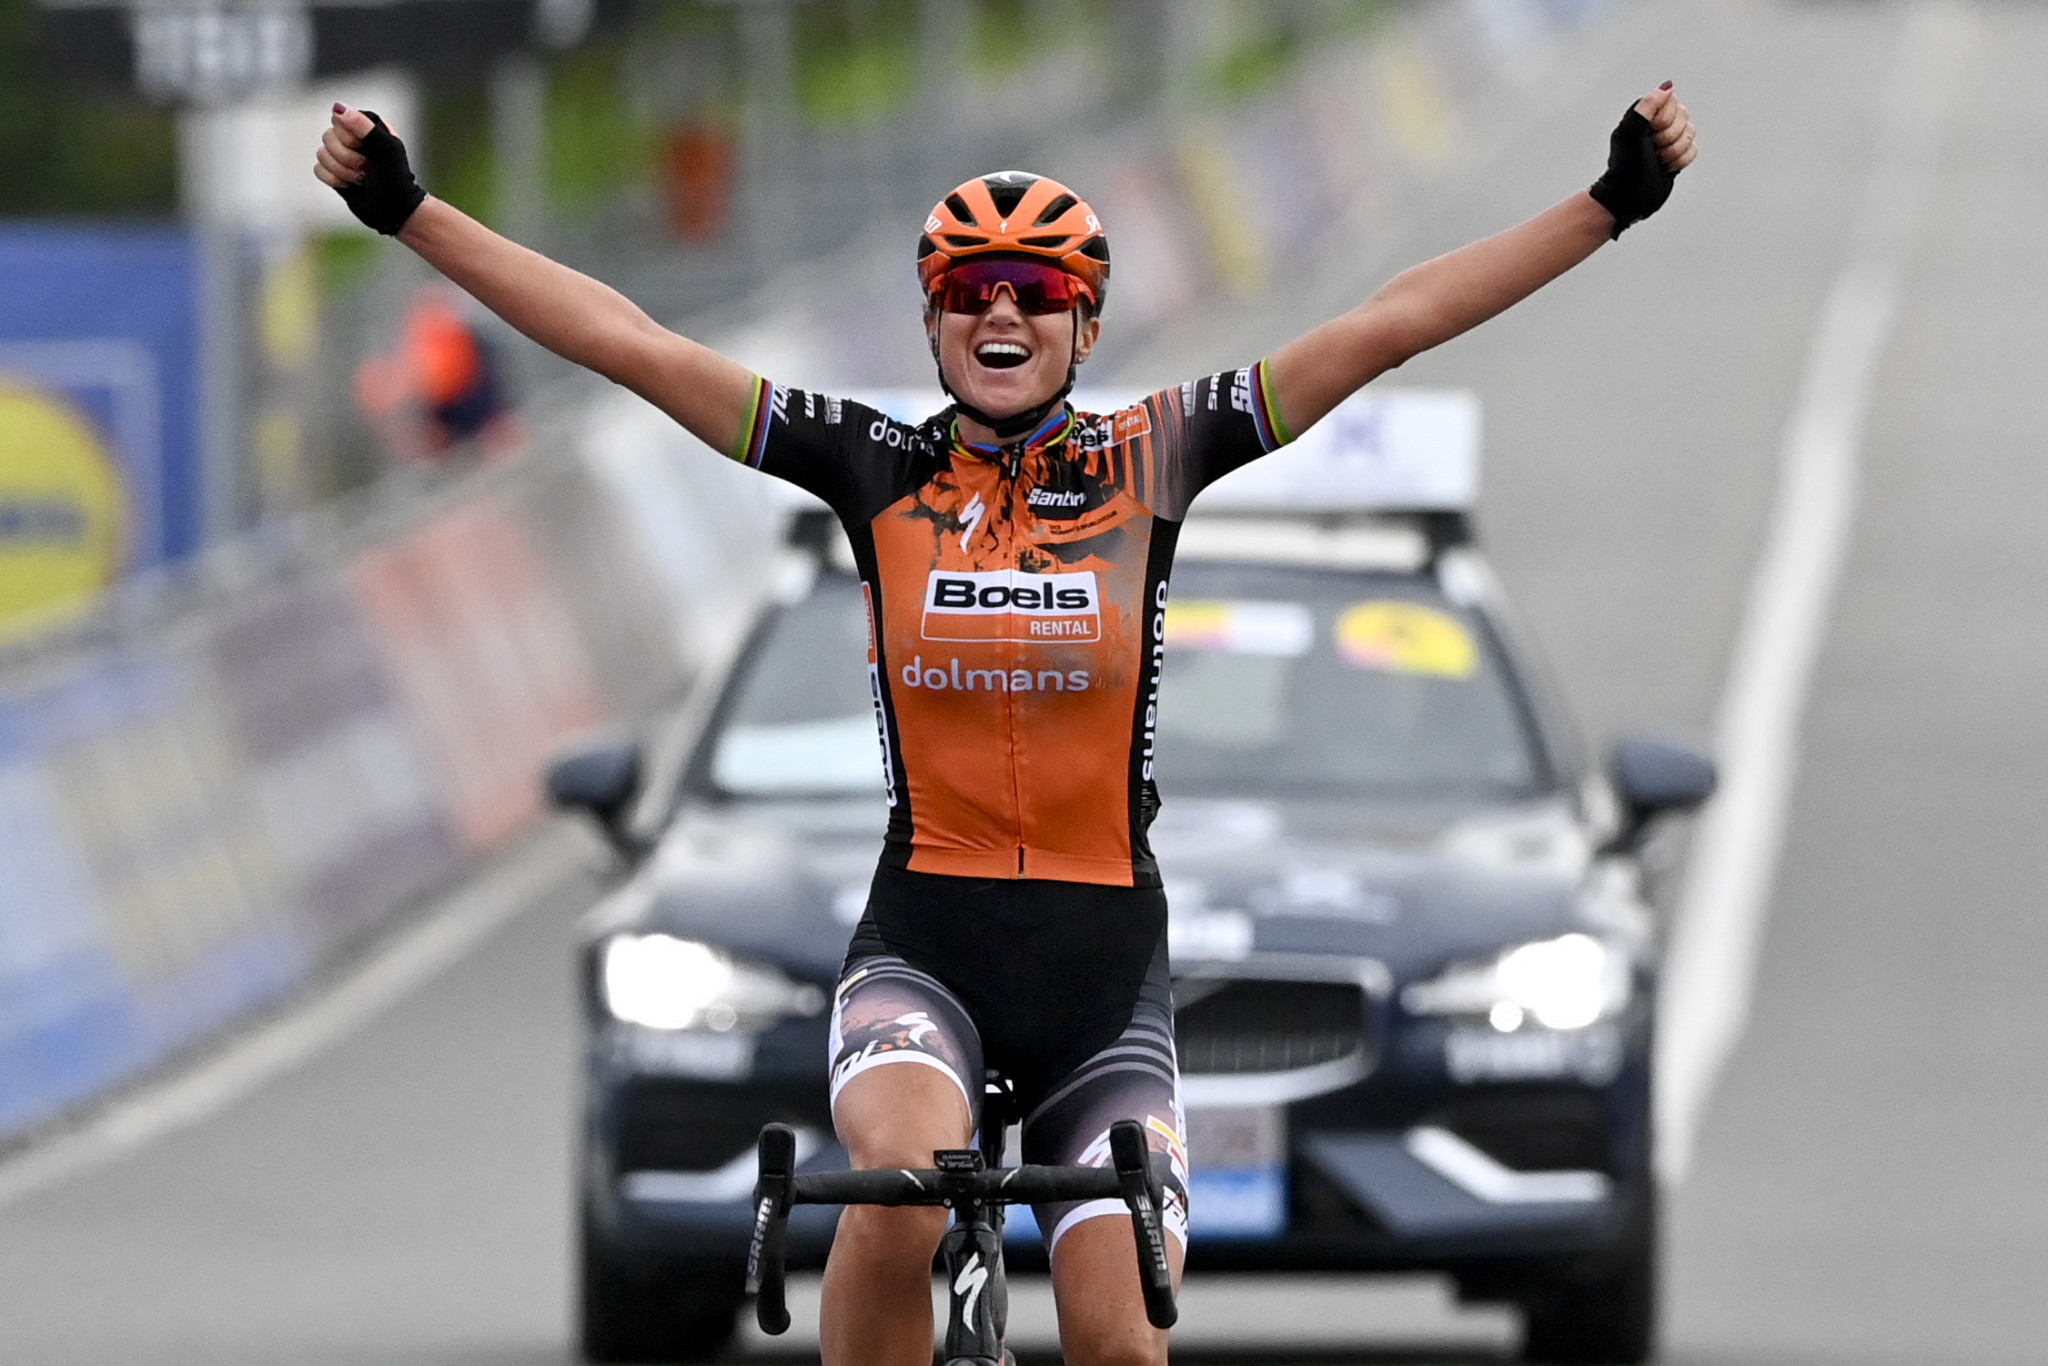 Tour of Flanders winner Chantal Van Den Broek-Blaak is among the field for the women's Three Days of De Panne race ©Getty Images